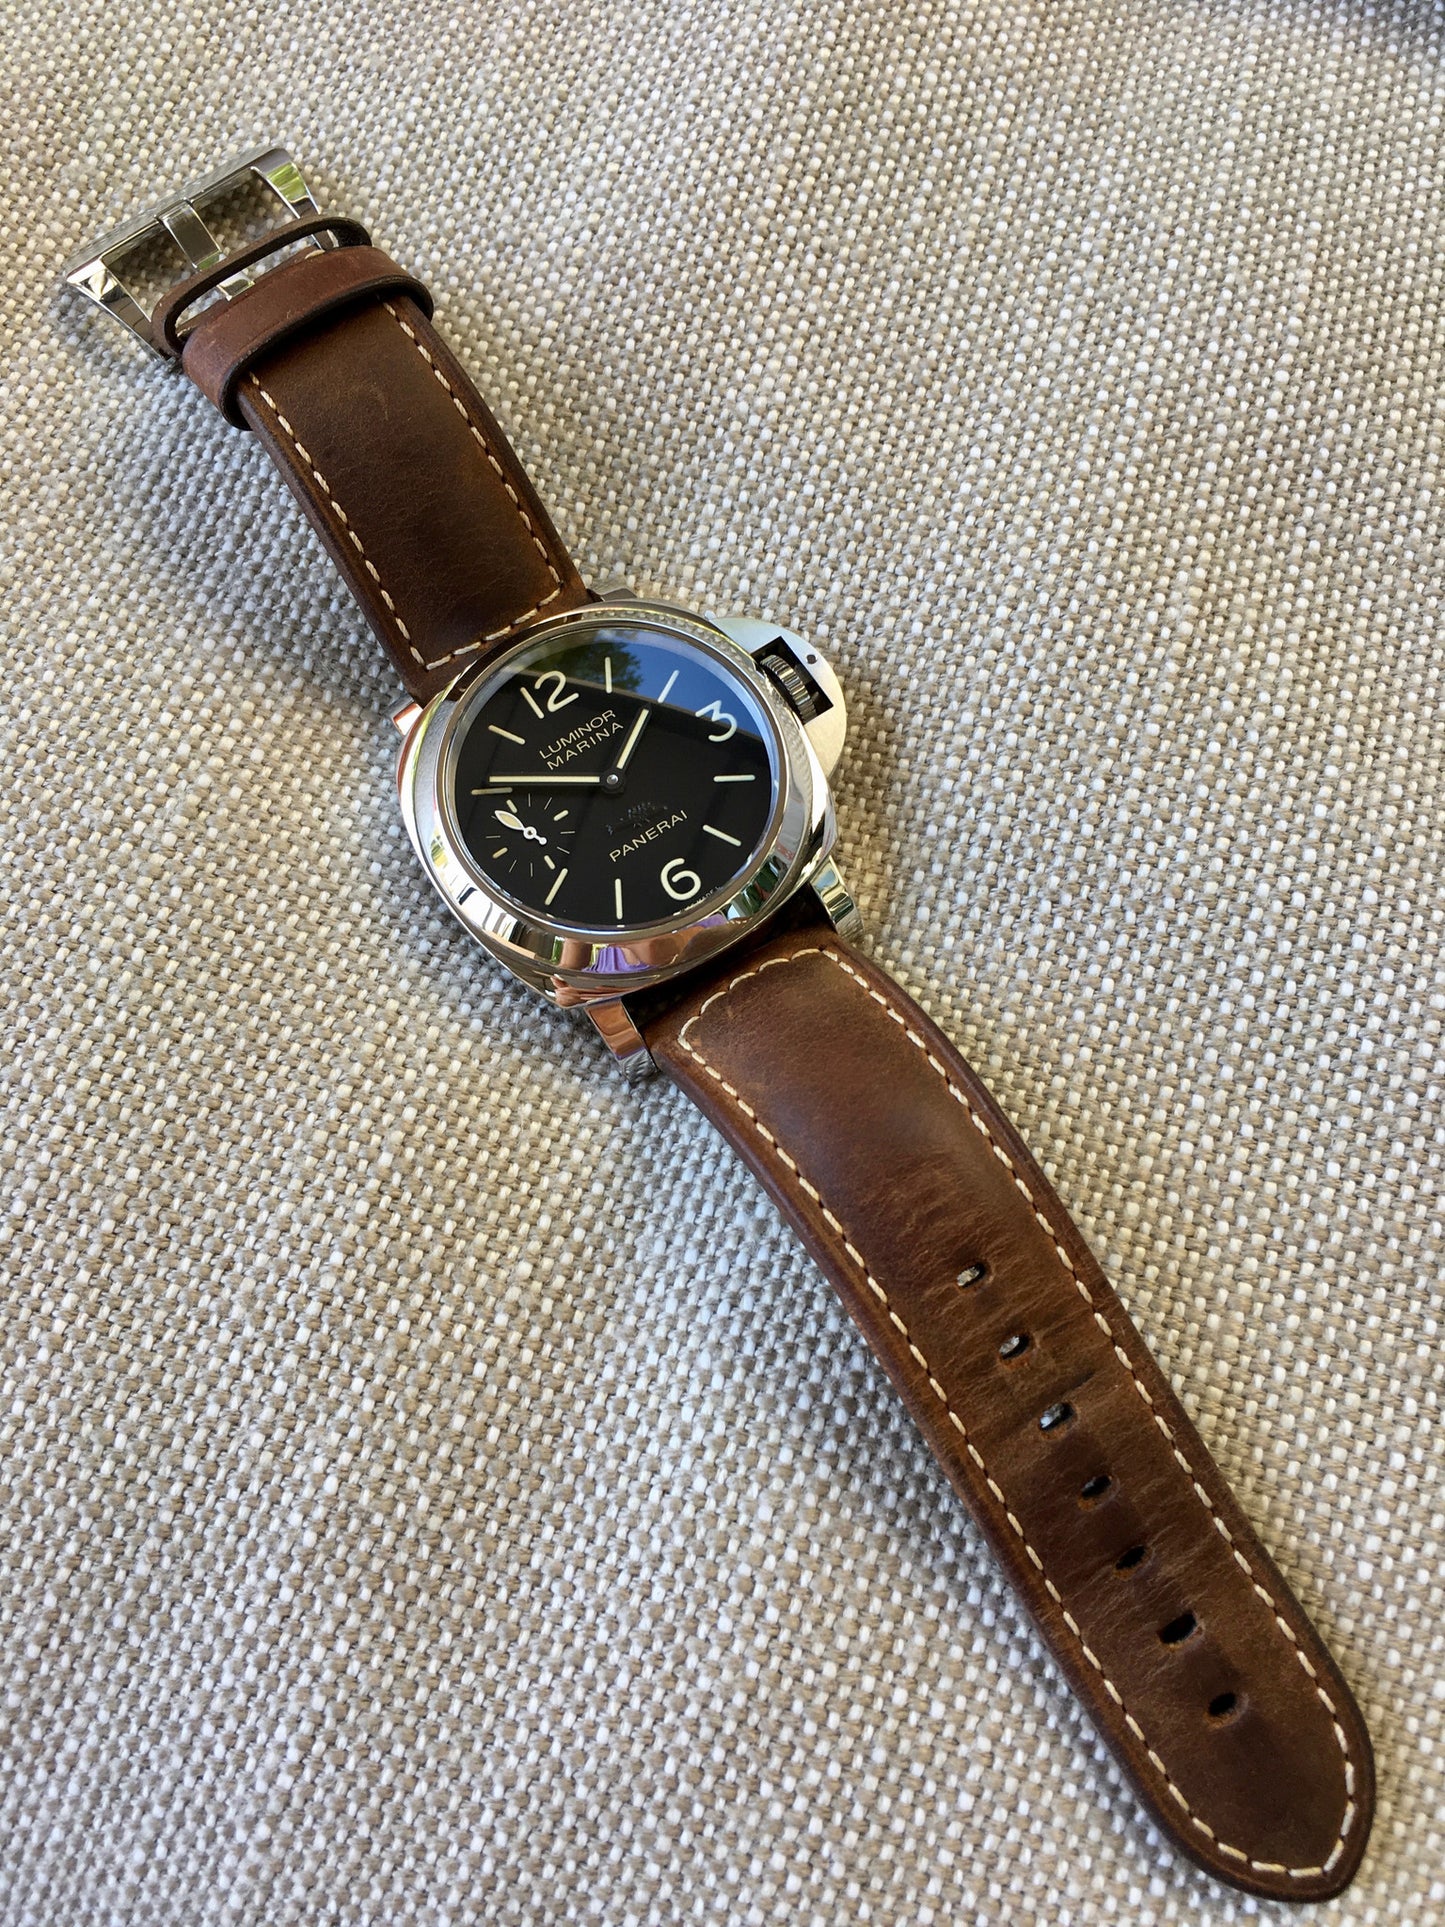 Panerai Luminor Marina Aspen Limited Edition PAM 467 Stainless Steel Watch Box Papers - Hashtag Watch Company